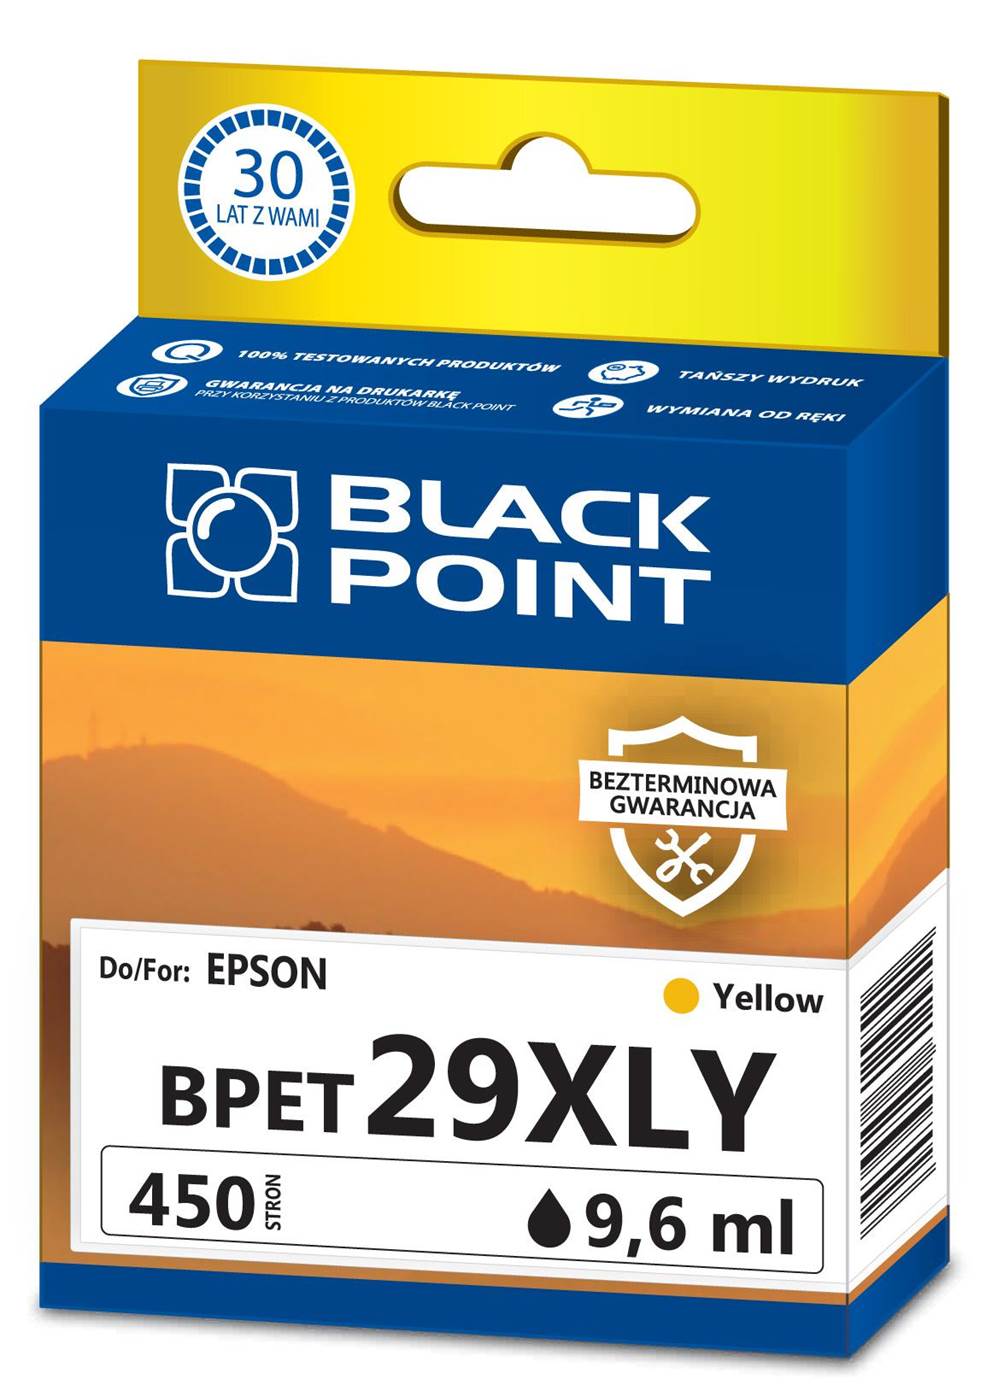 Kartridż yellow Black Point BPET29XLY (Epson C13T29944012), 450 str.